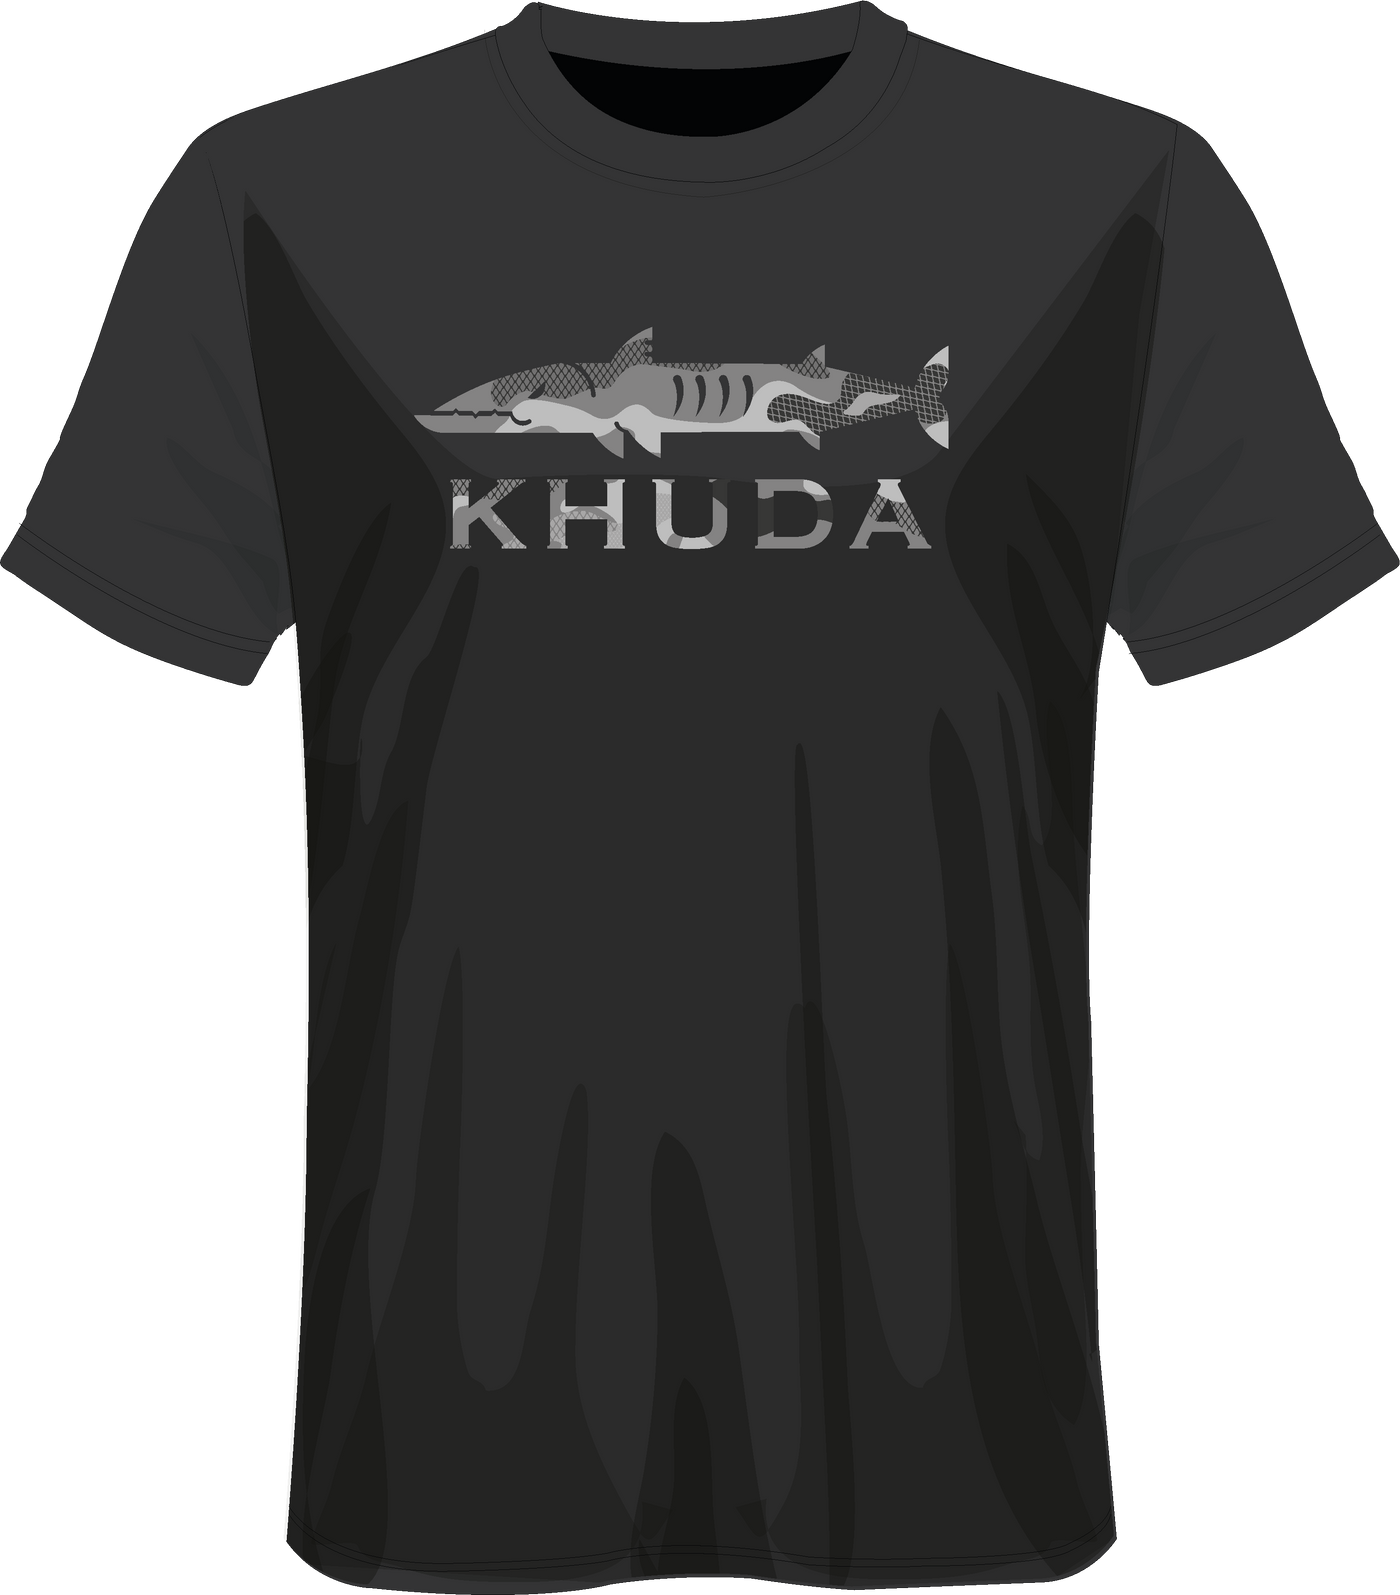 Camiseta Para Hombre Negra Est Militar Gris Big Khuda